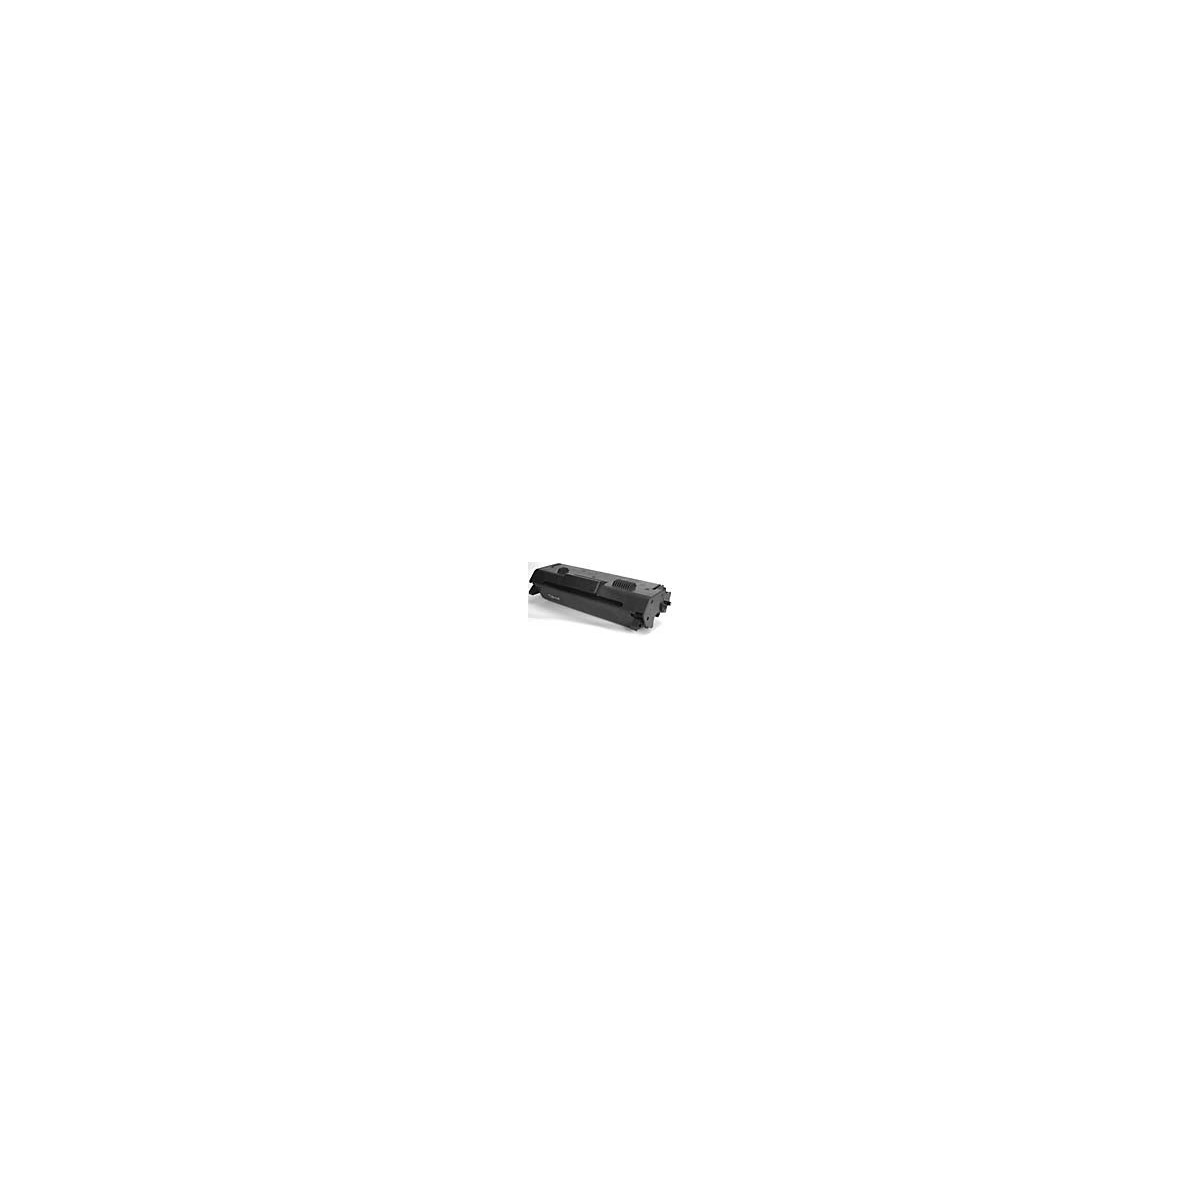 Konica Minolta 4153101 - 9000 pages - Black - 1 pc(s)